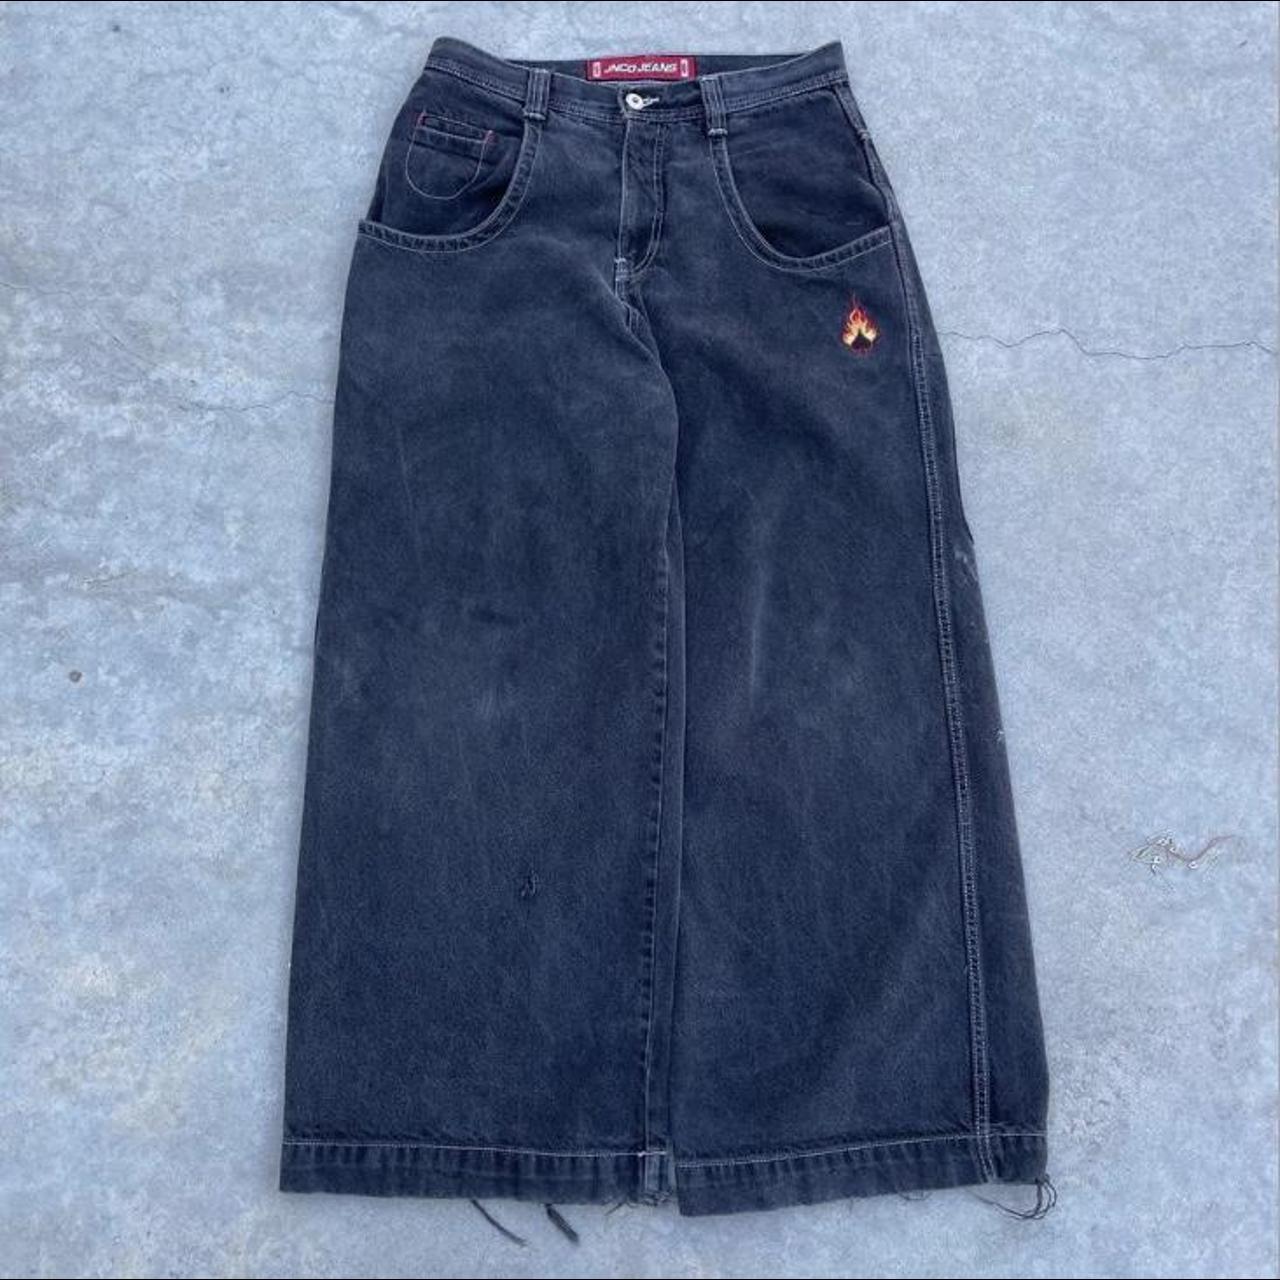 Vintage JNCO Jeans Black, Rare Flaming Spade 26